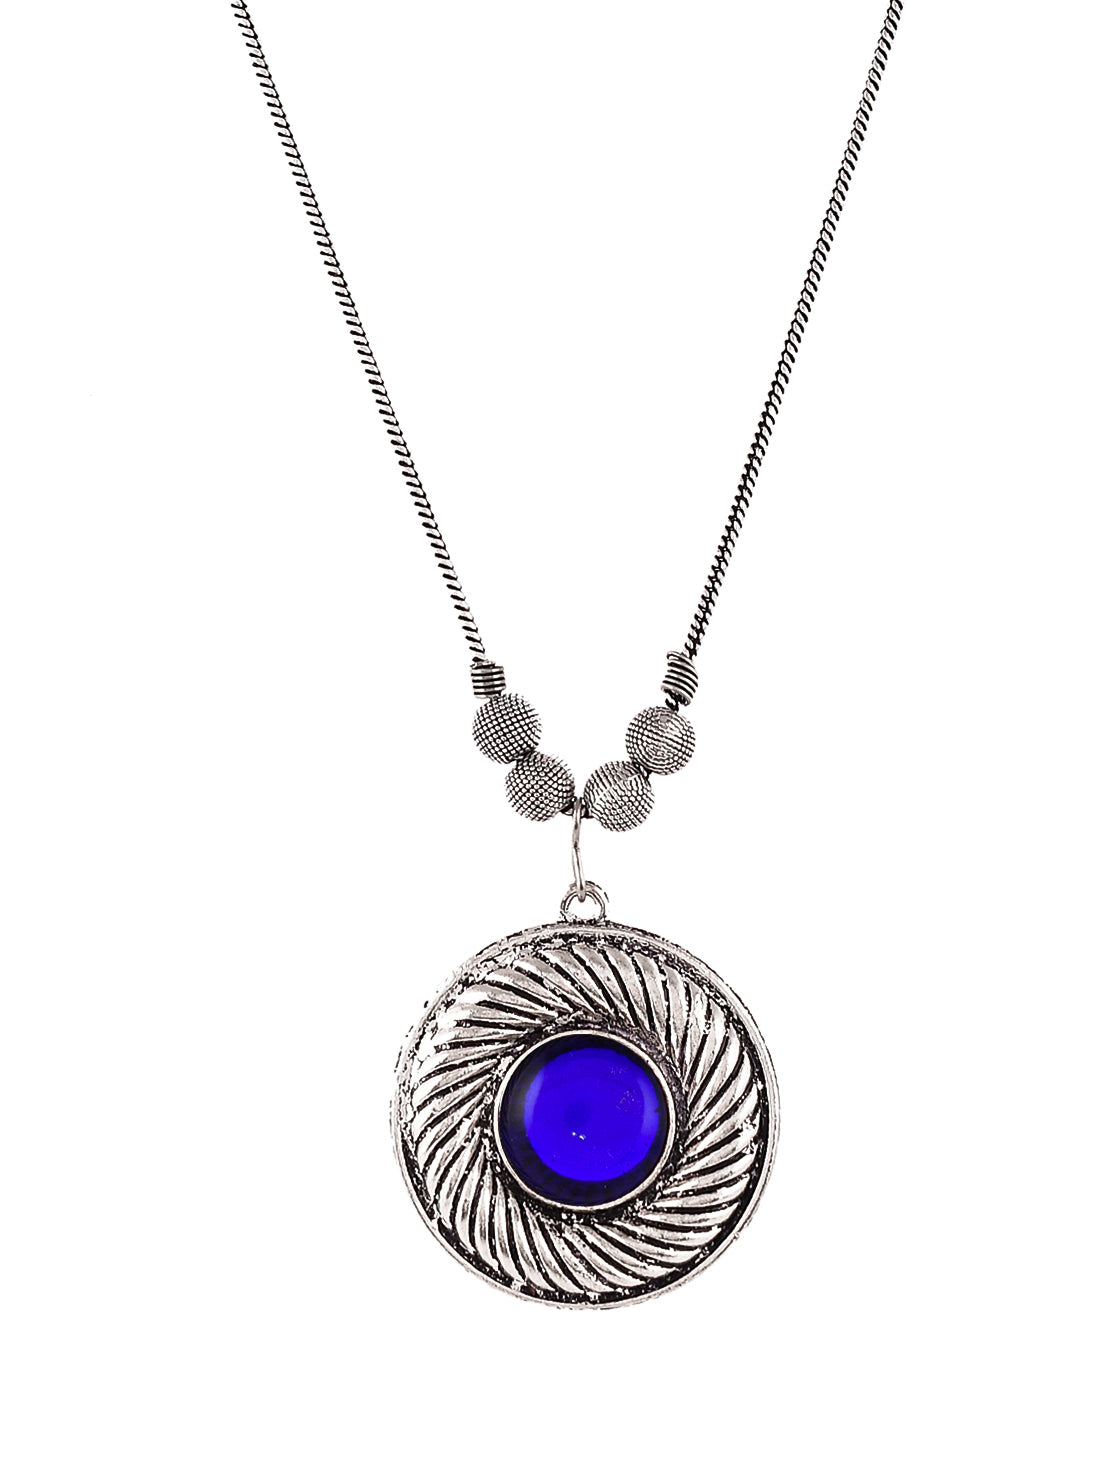 Natural London Blue Speechless Pendant - Vintage Jewelry | Silver Embrace  Jewelry #P103z | London blue topaz pendant, Blue pendant necklace, Blue  topaz pendant